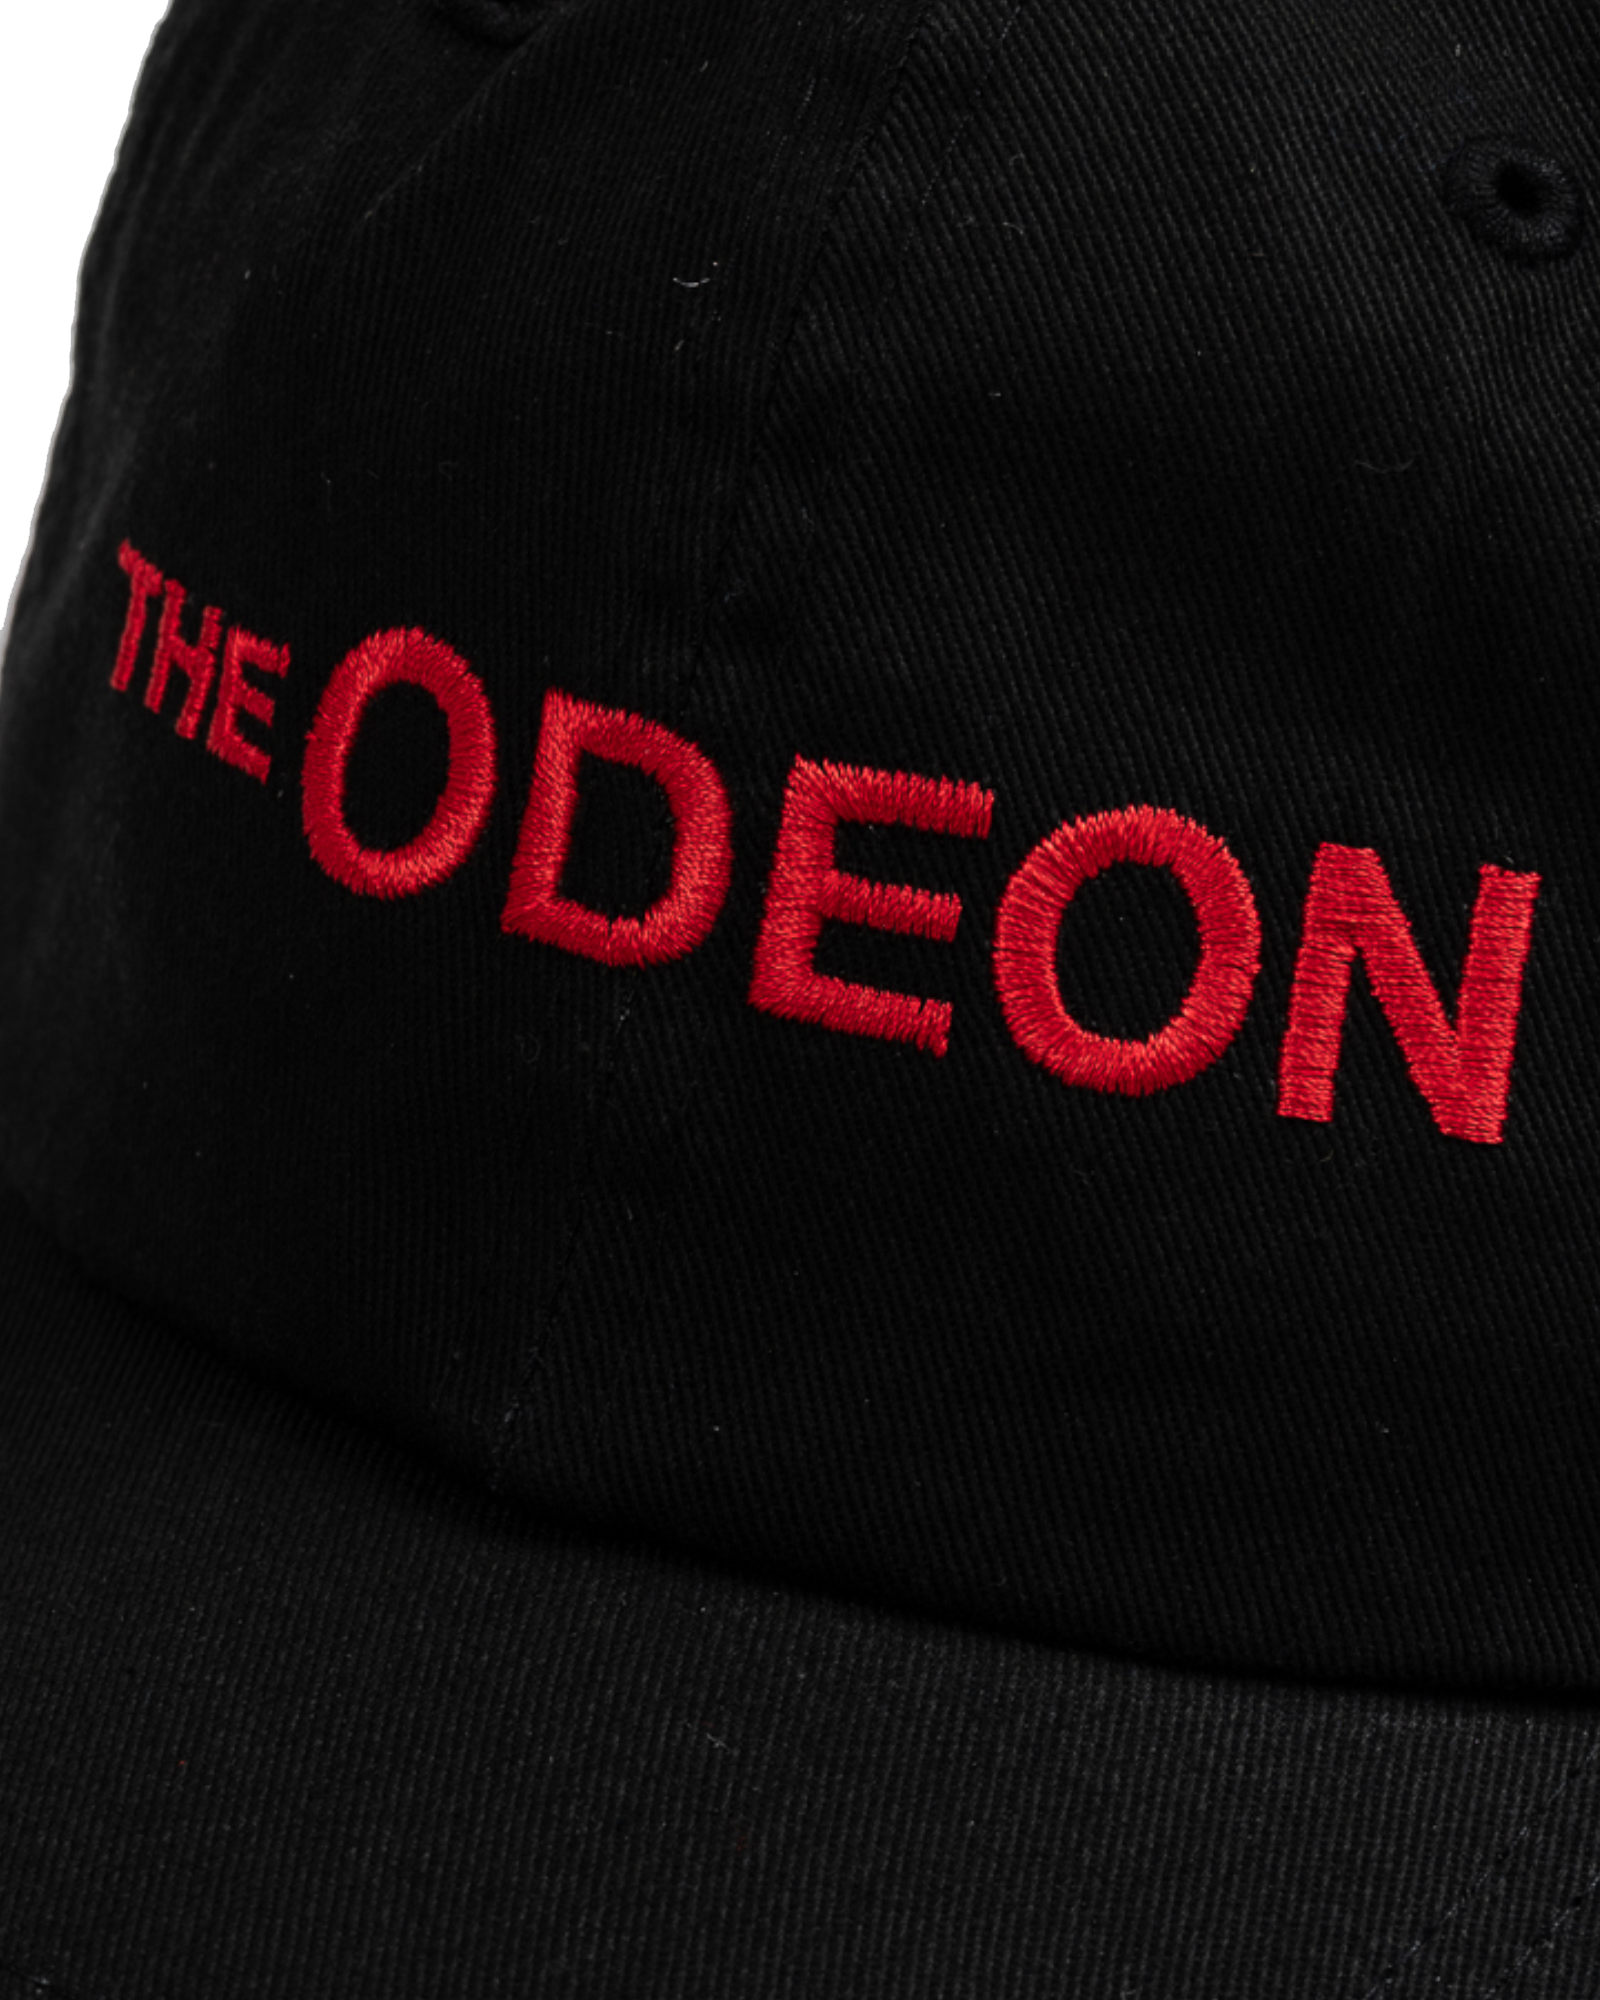 NYC Souvenirs - Hat - The Odeon - Cap - Black